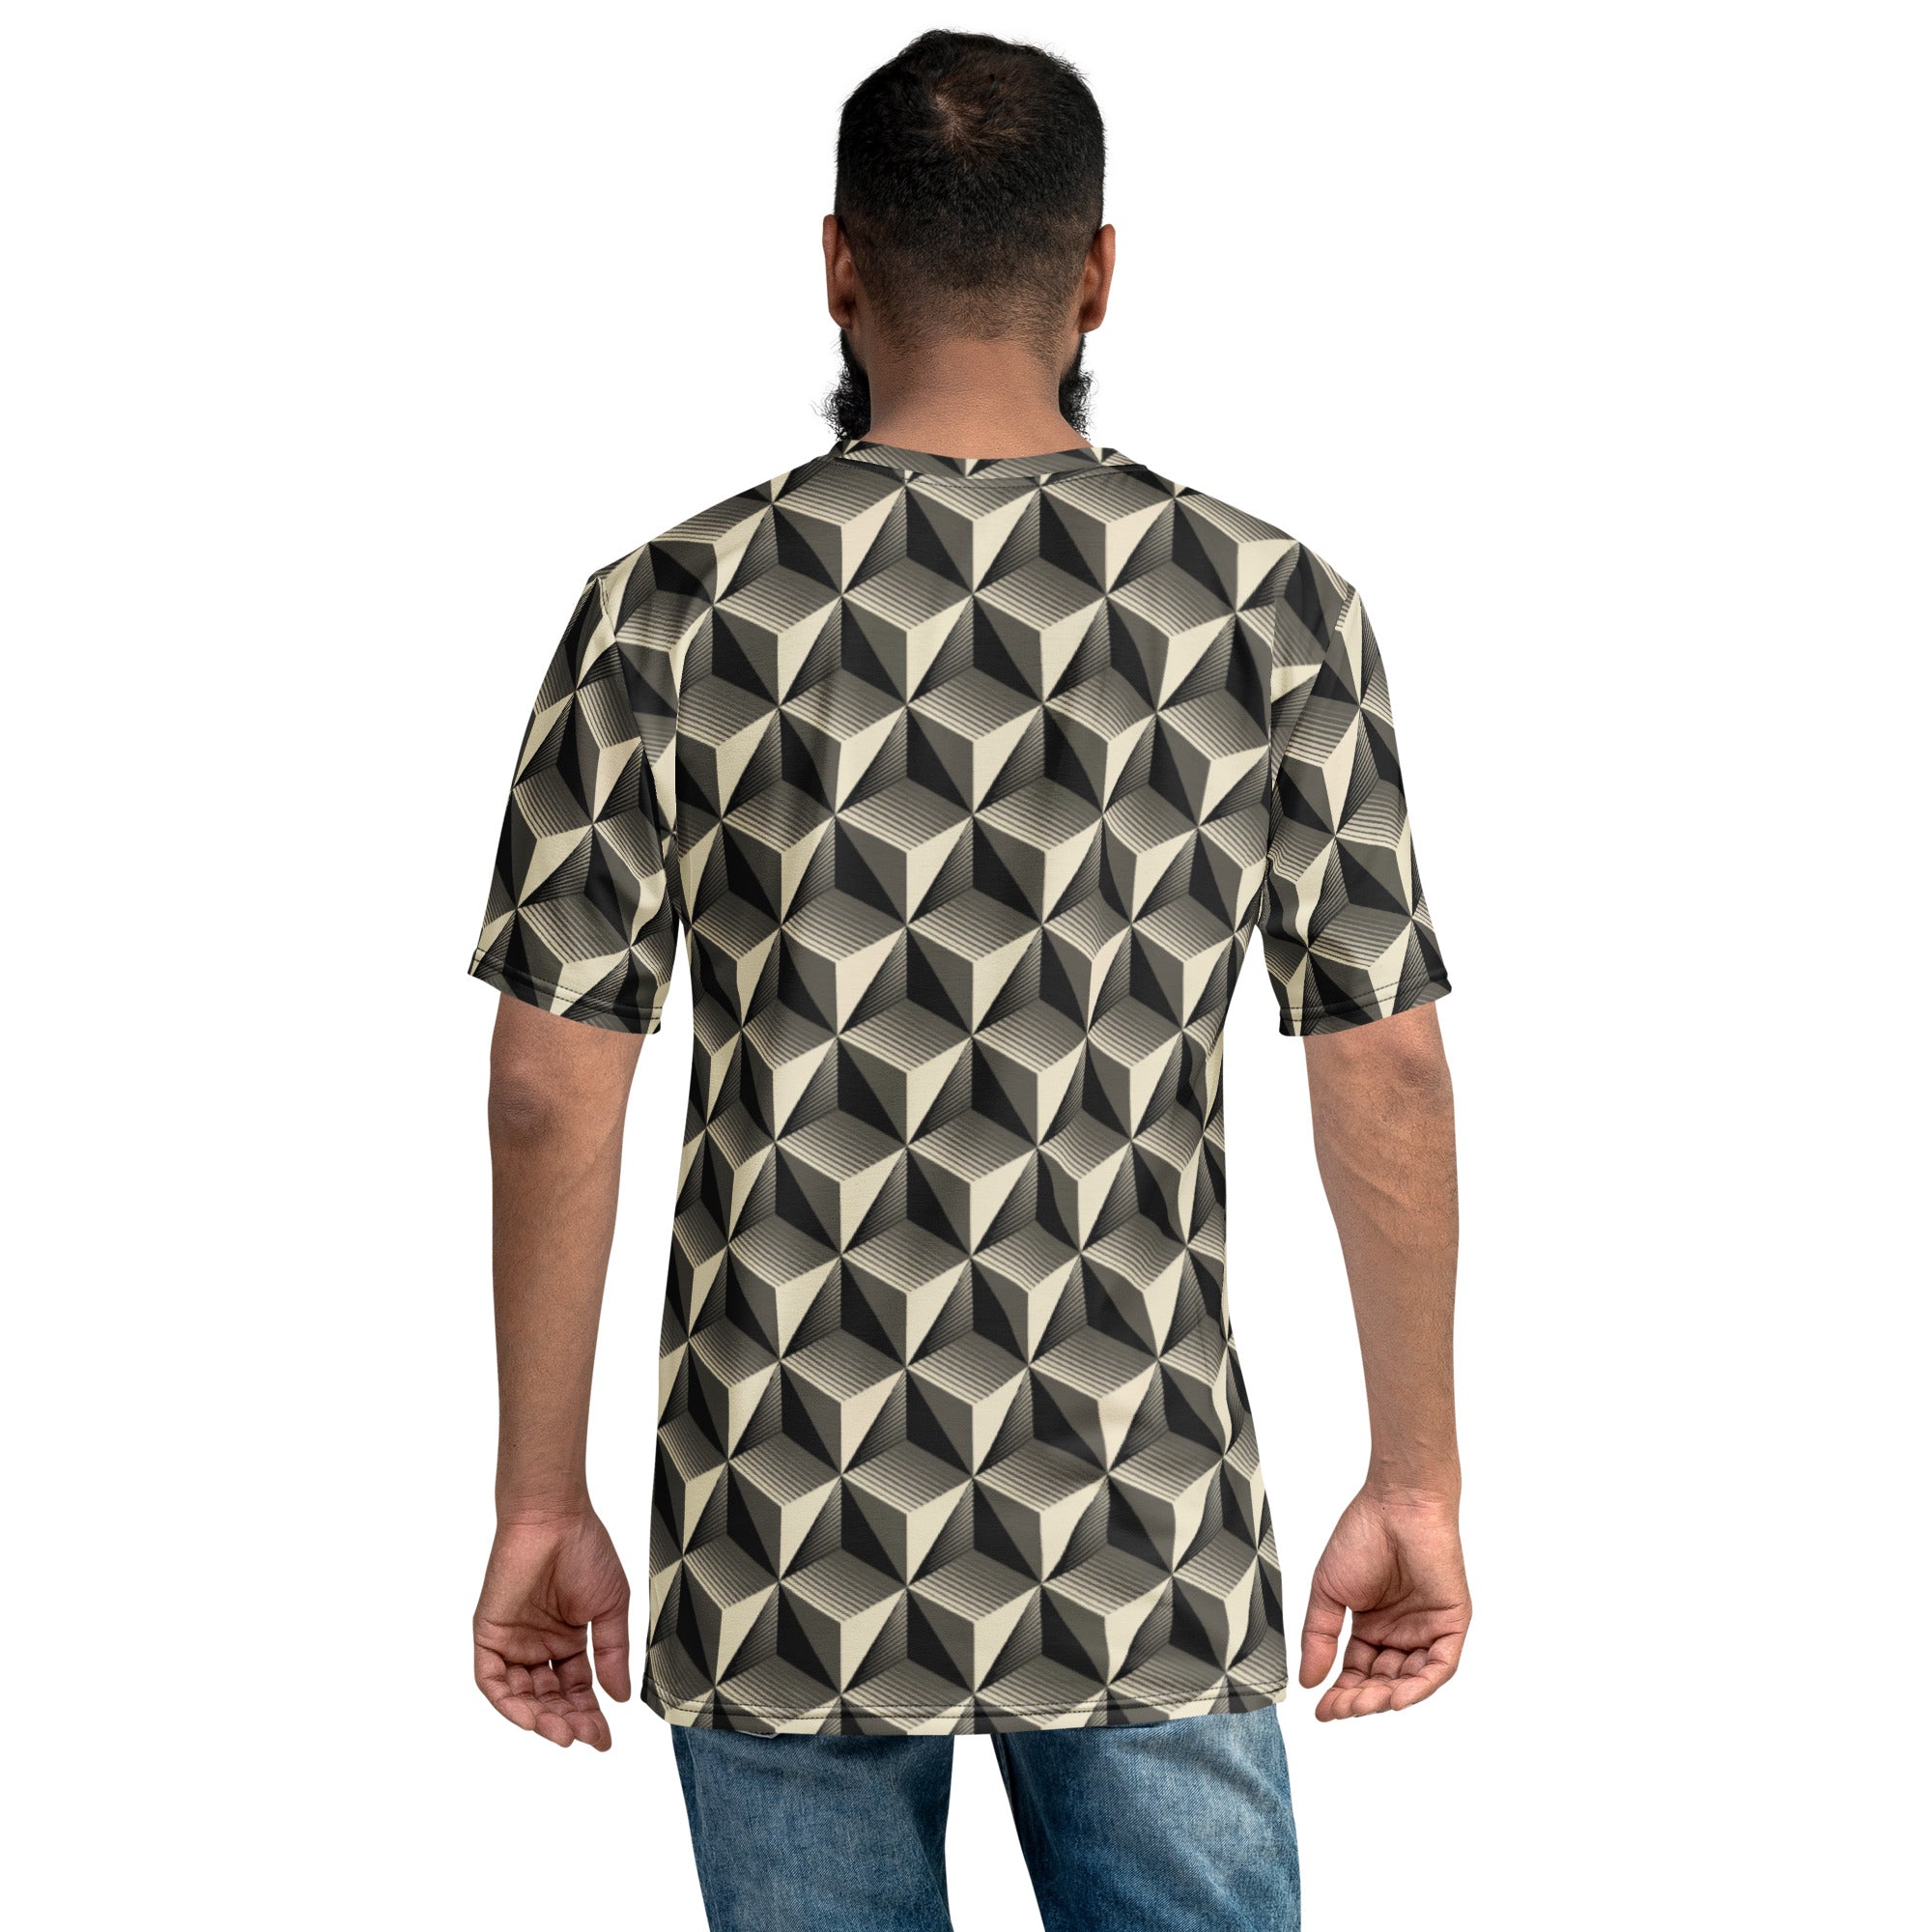 Black and White Graphic Cubes  designed Men's t-shirt, by Sensus Studio Design